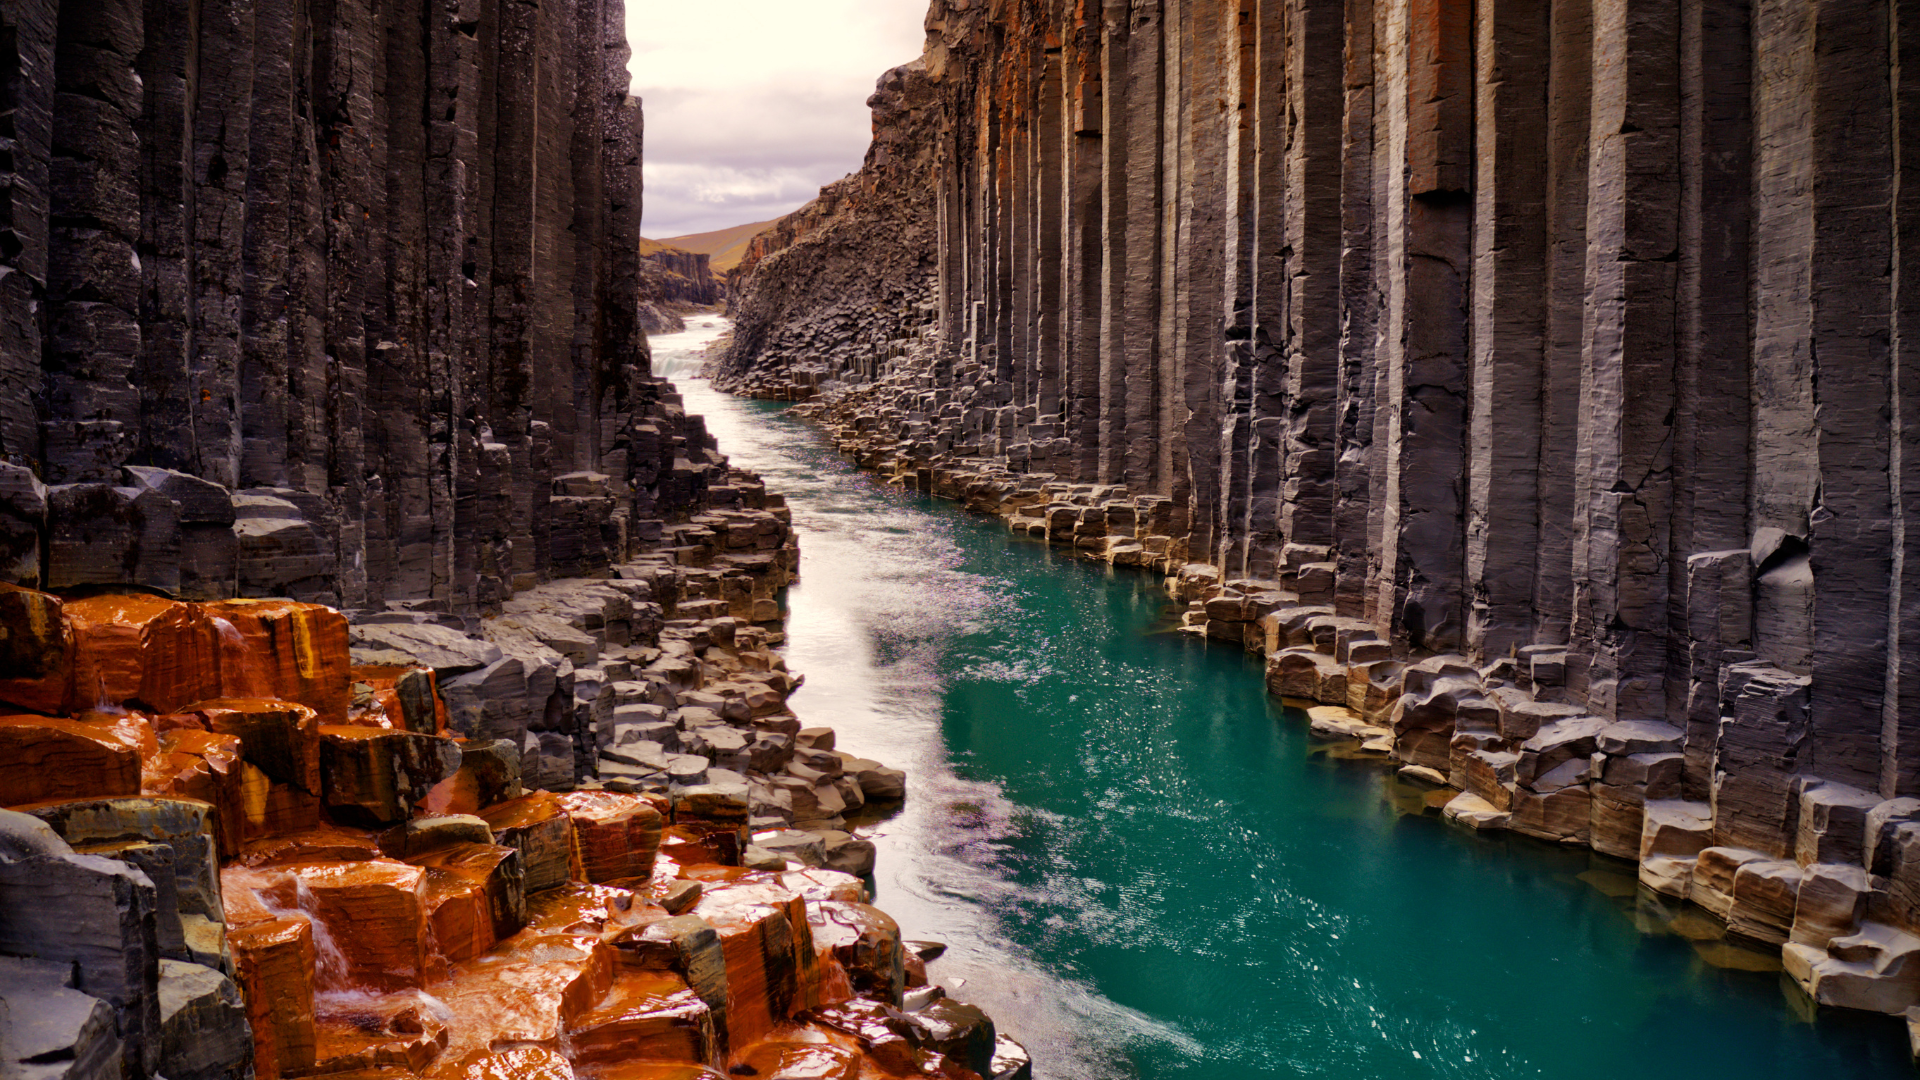 Studlagil Basalt Canyon in Iceland